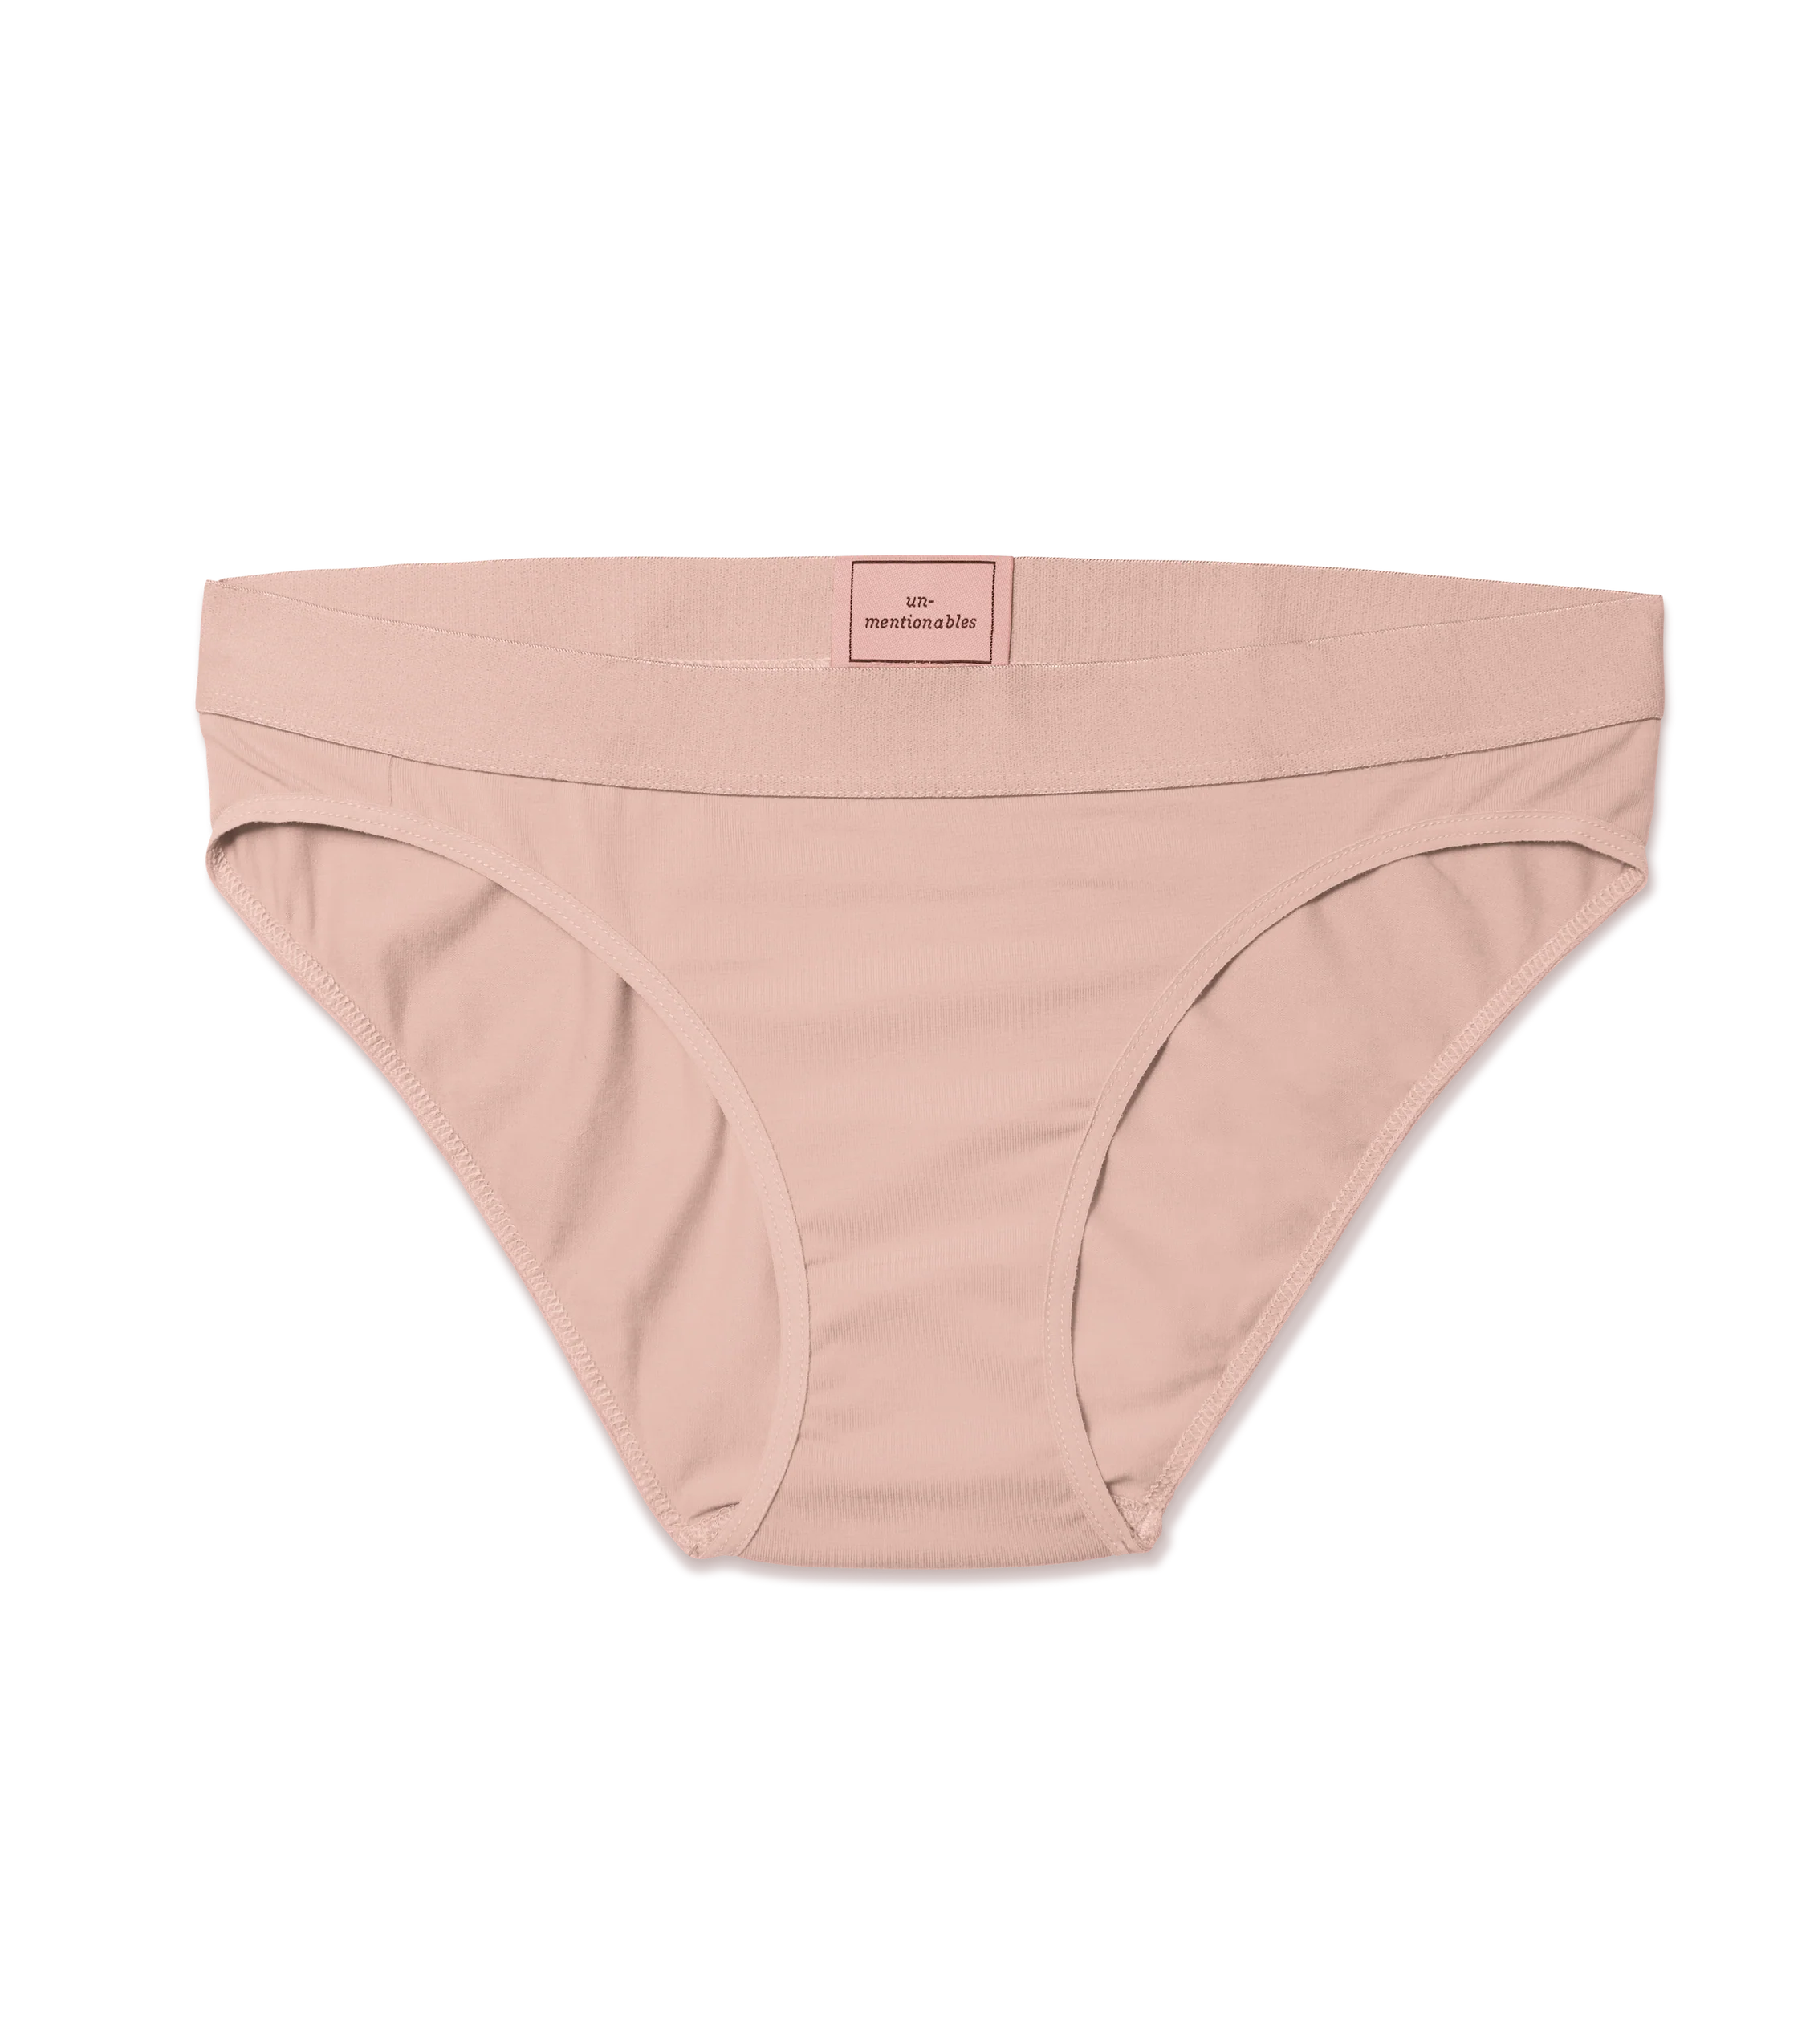 REVIEW - New underwear seller : r/FashionReps